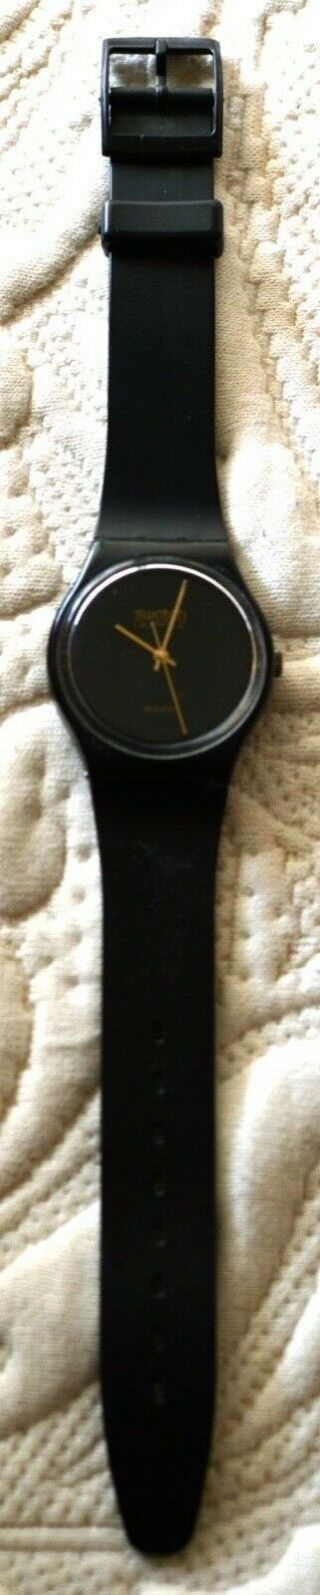 Rare 1983 Swatch Watch BLACK MAGIC GB101 2